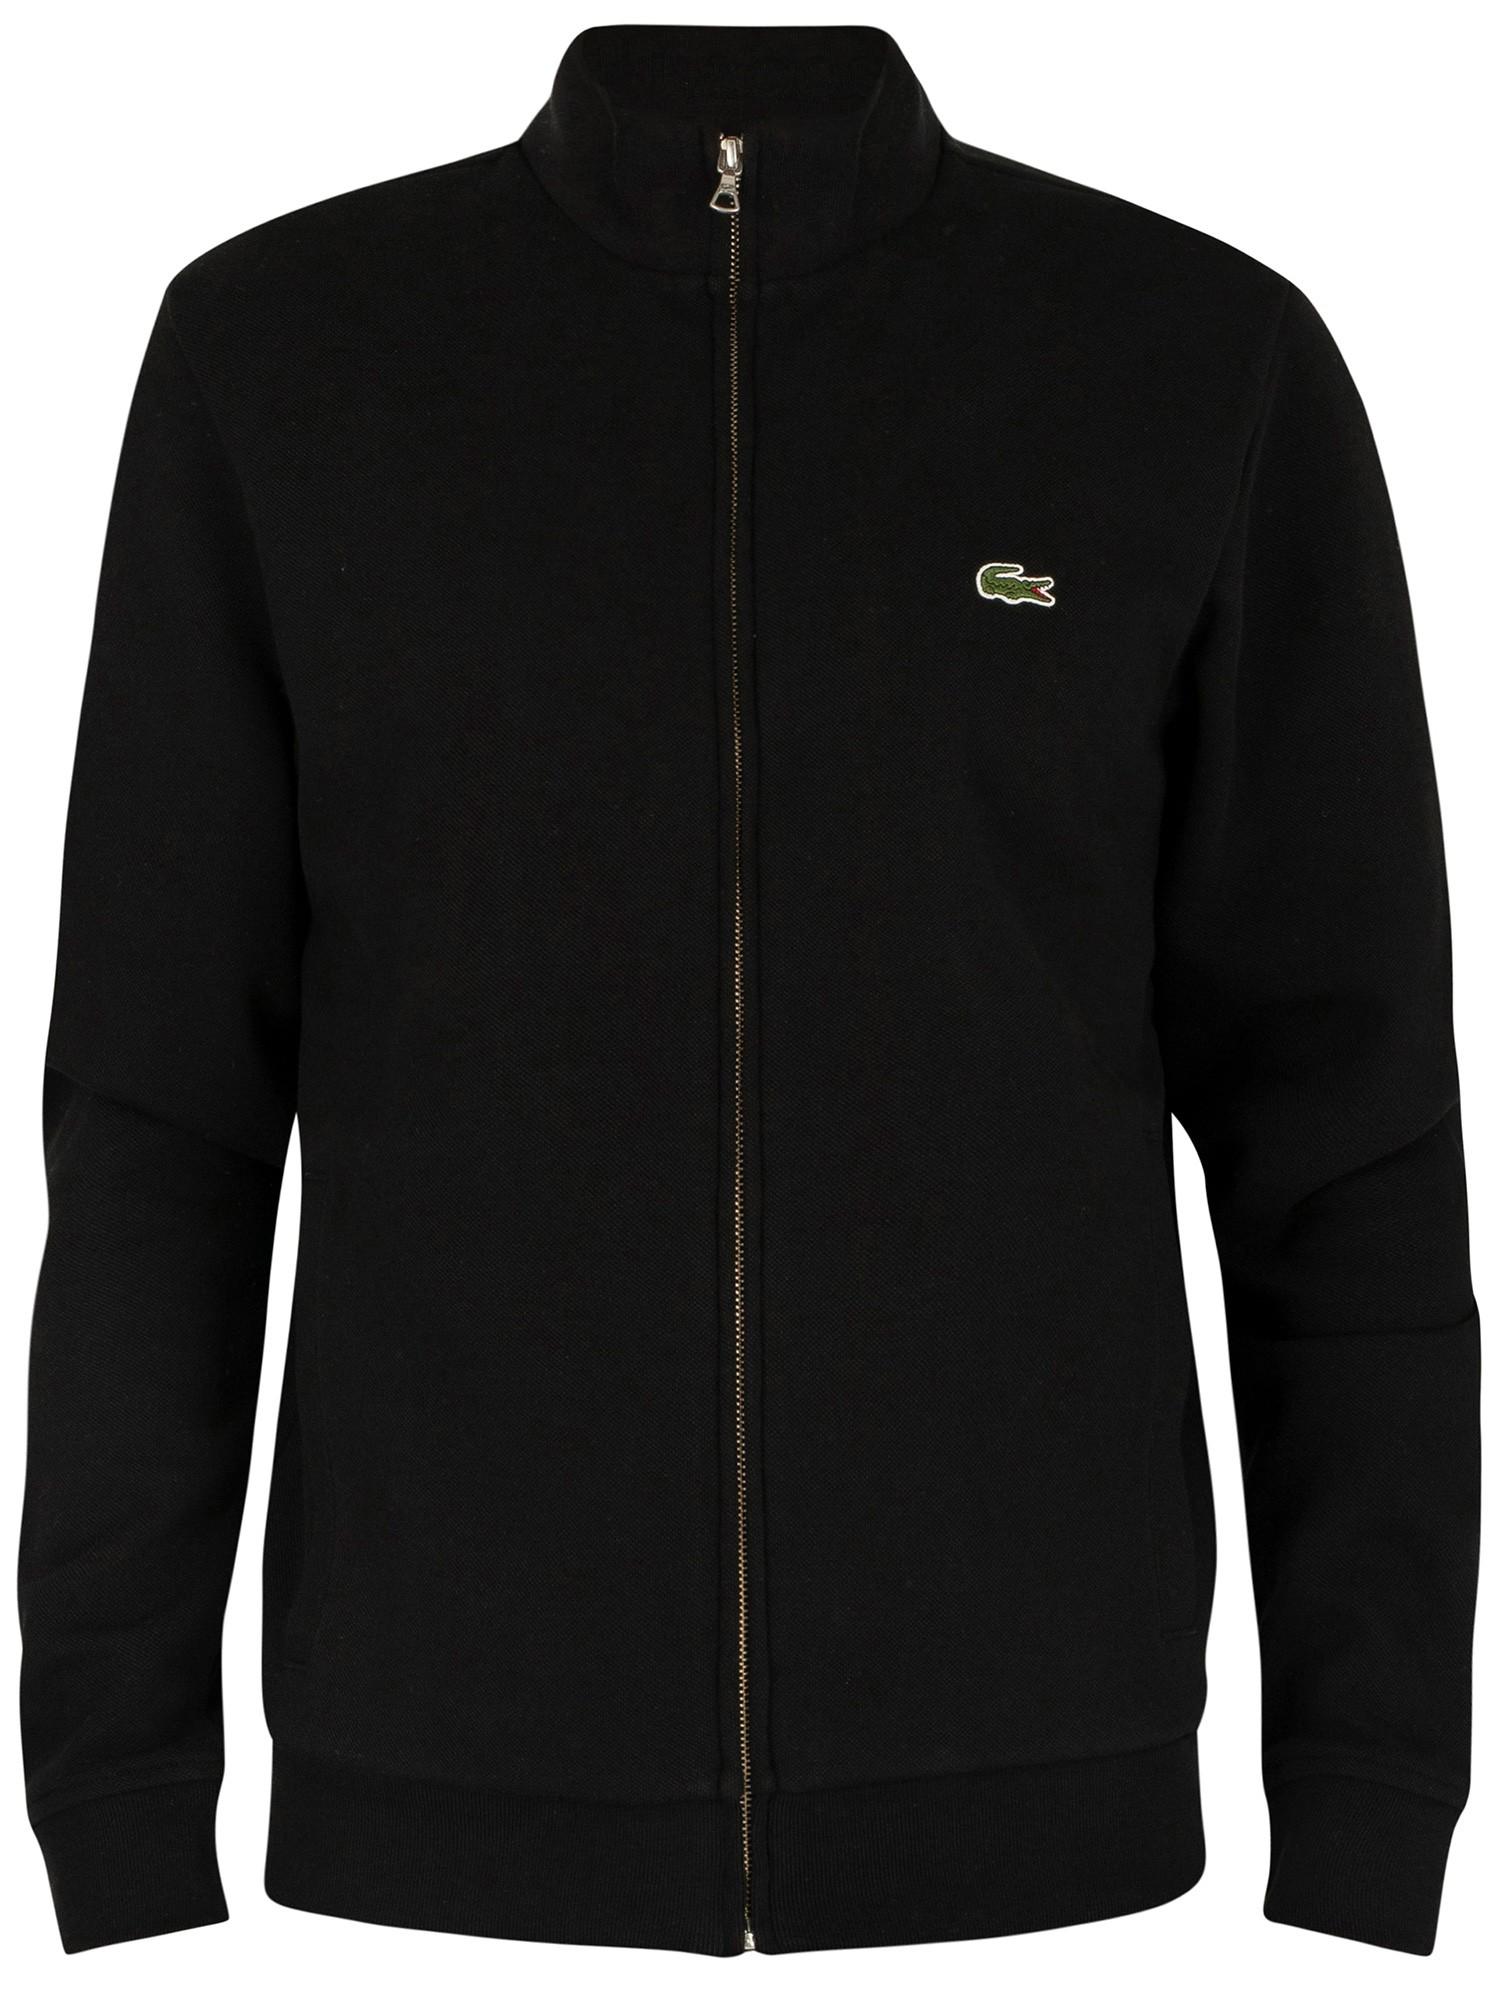 Lacoste Zip Track Jacket in Black for Men - Lyst